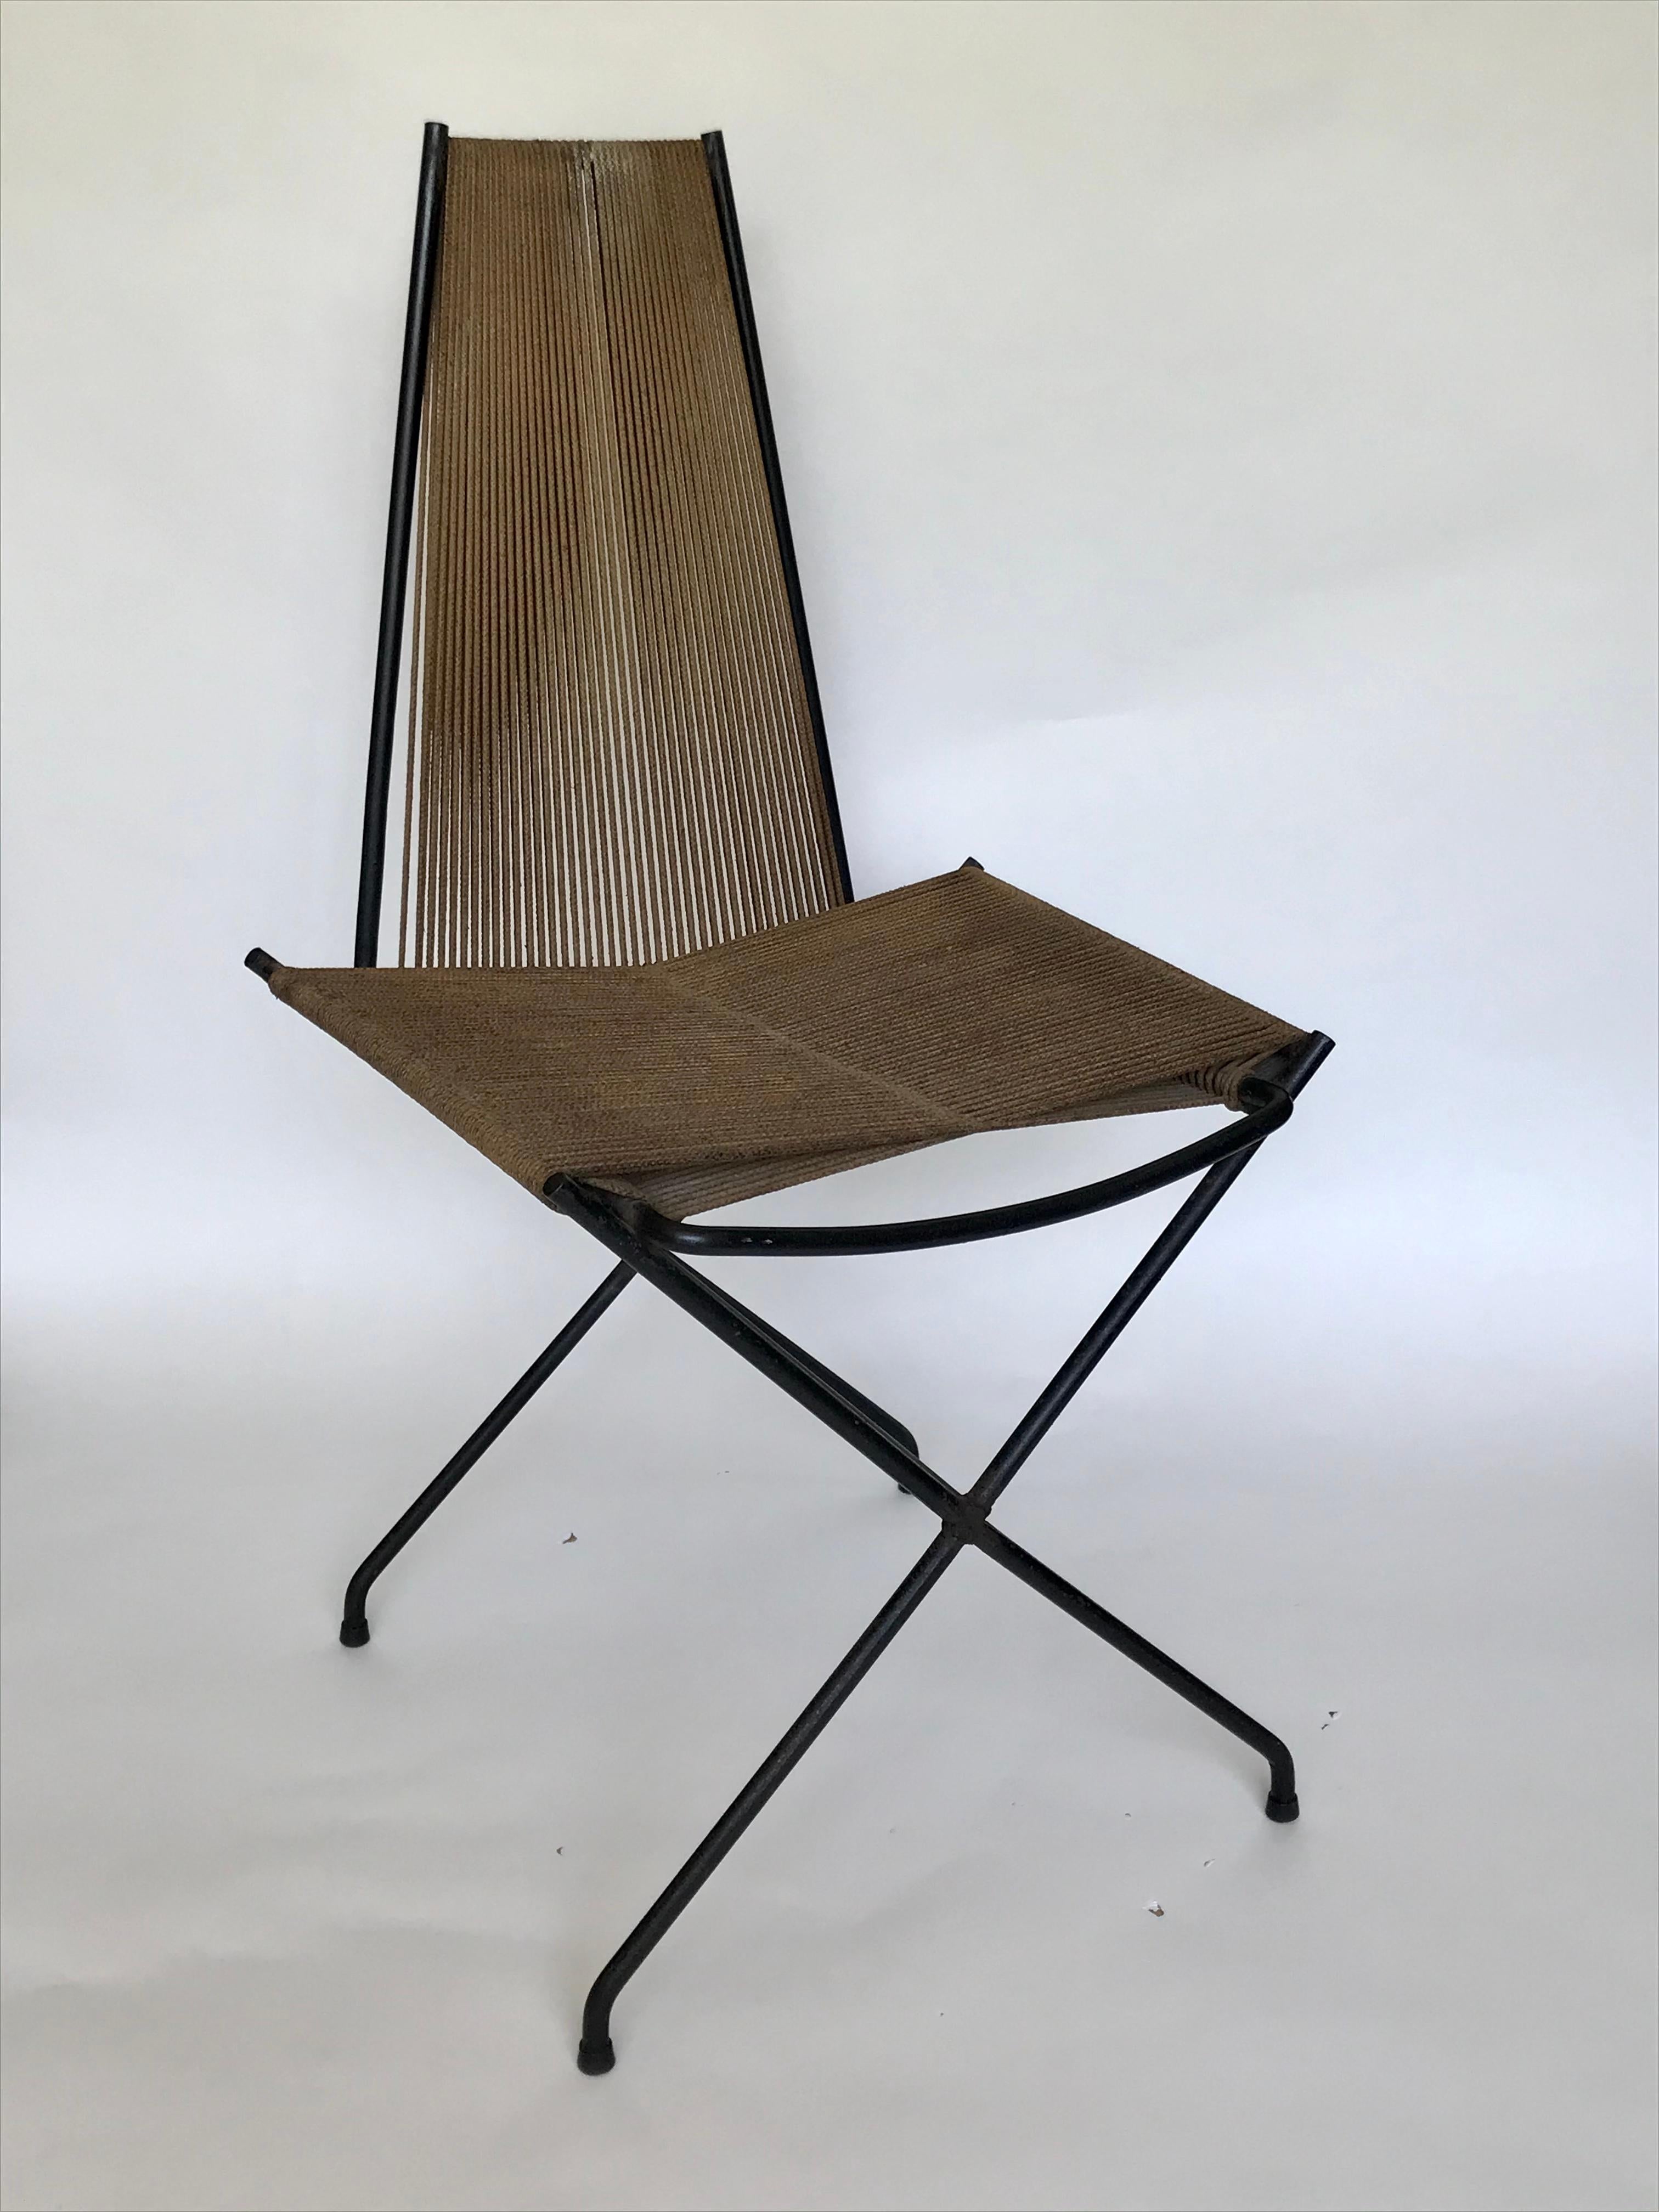 American Gunnar Birkerts Architectural Iron + String Chair, 20th Century